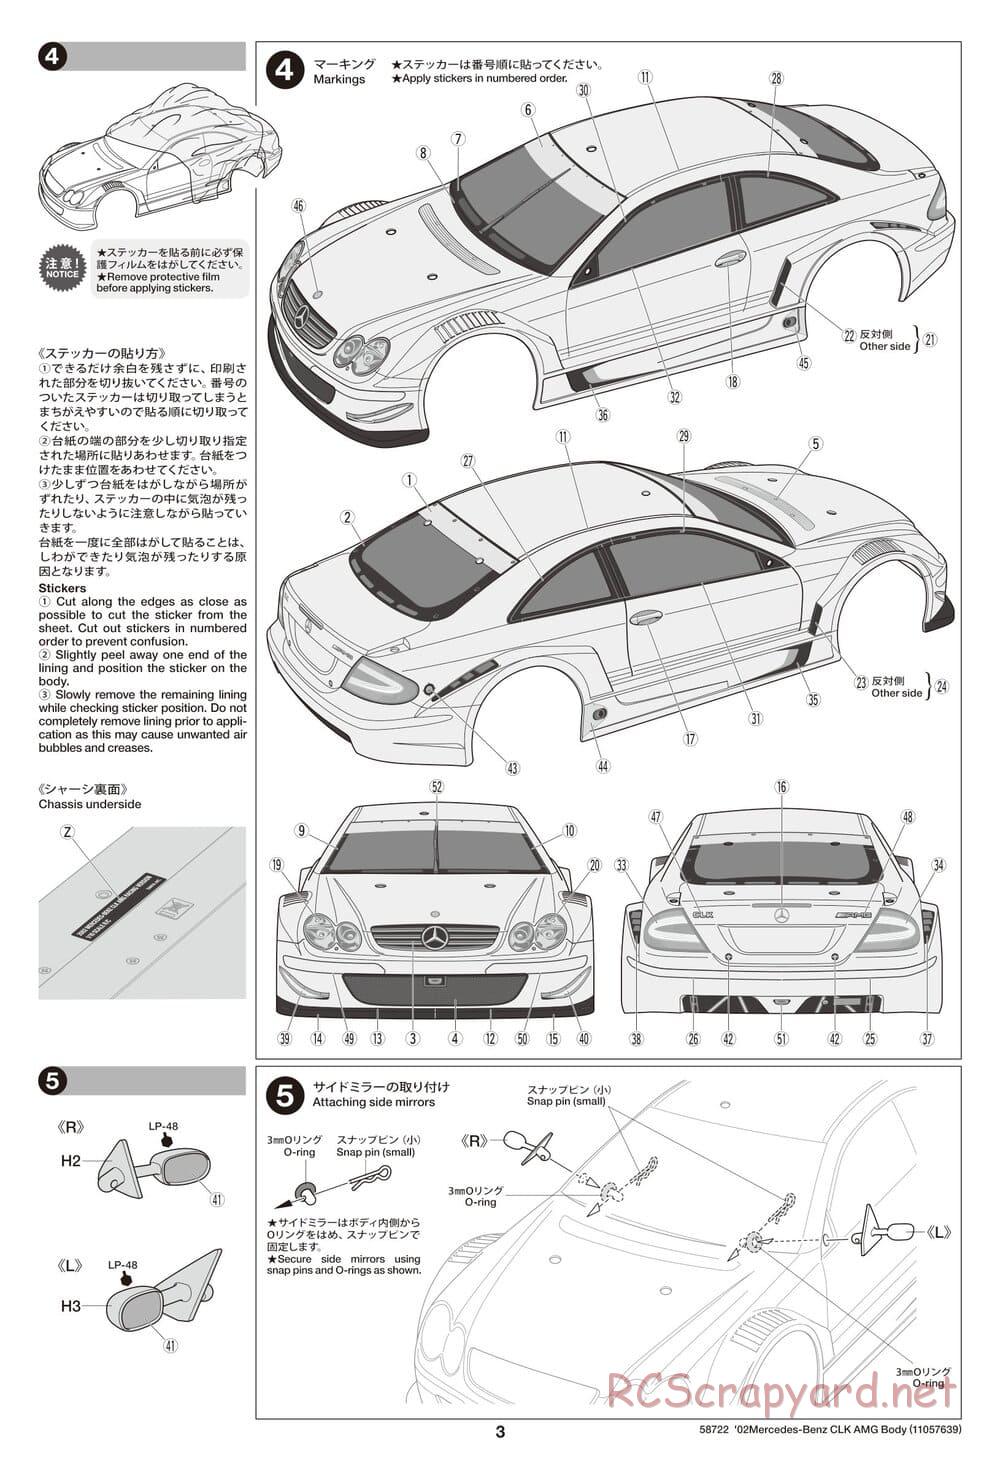 Tamiya - 2002 Mercedes-Benz CLK AMG Racing Version - TT-02 Chassis - Body Manual - Page 3